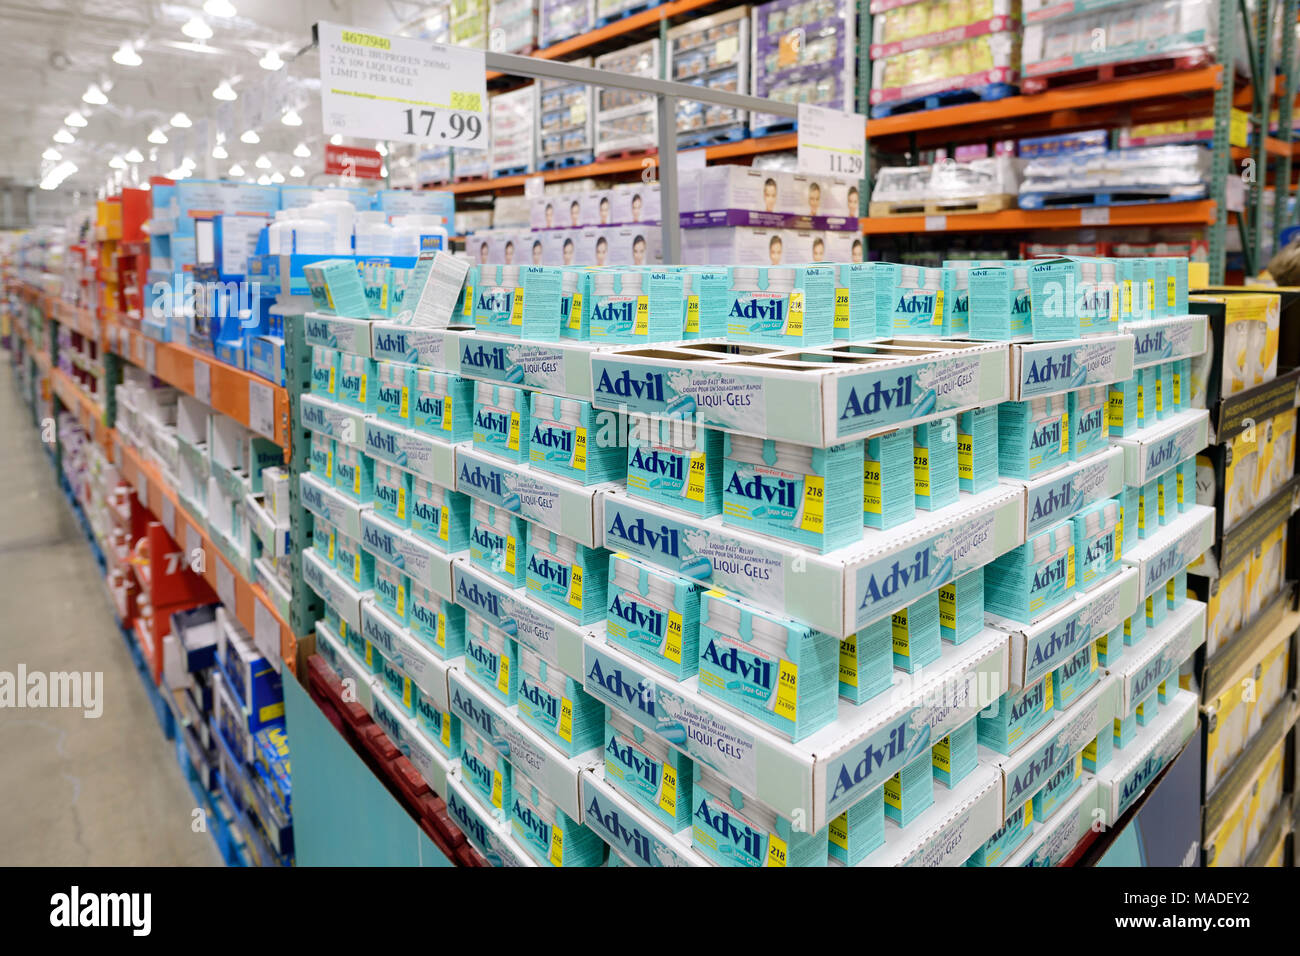 Advil liqui-gels pain relief medications at Costco Wholesale membership warehouse store pharmacy section. British Columbia, Canada 2017. Stock Photo